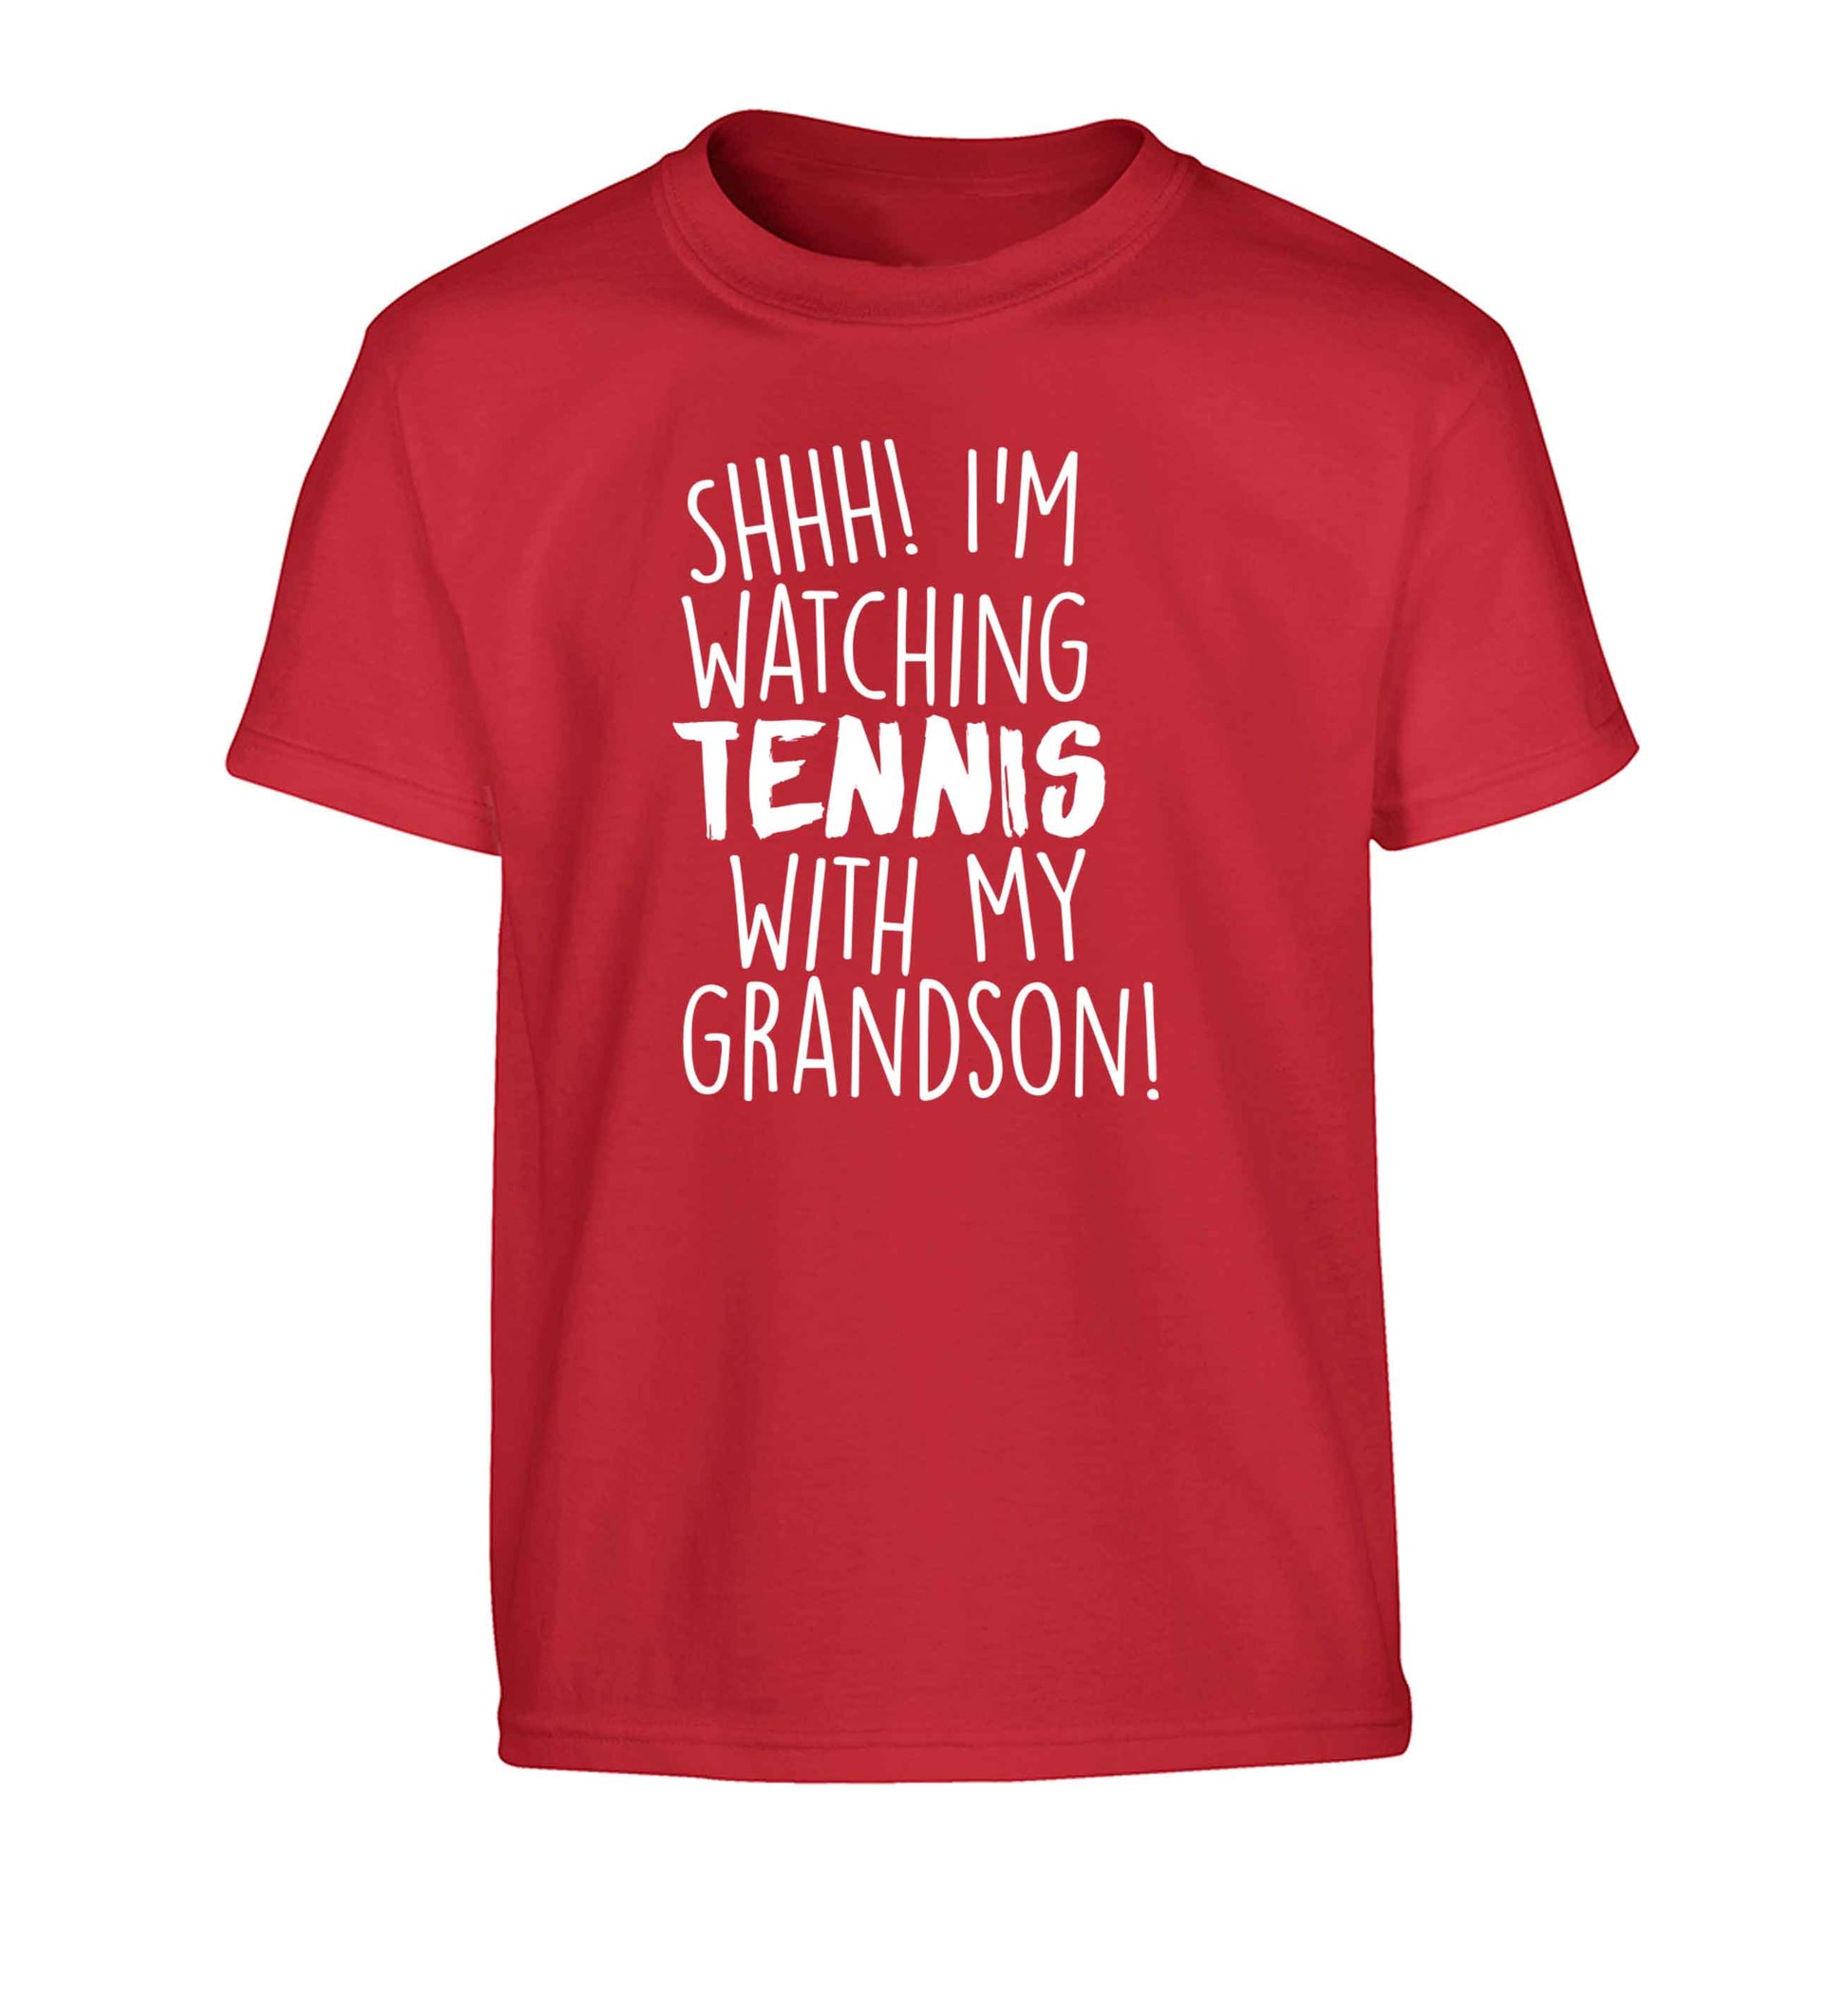 Shh! I'm watching tennis with my grandson! Children's red Tshirt 12-13 Years